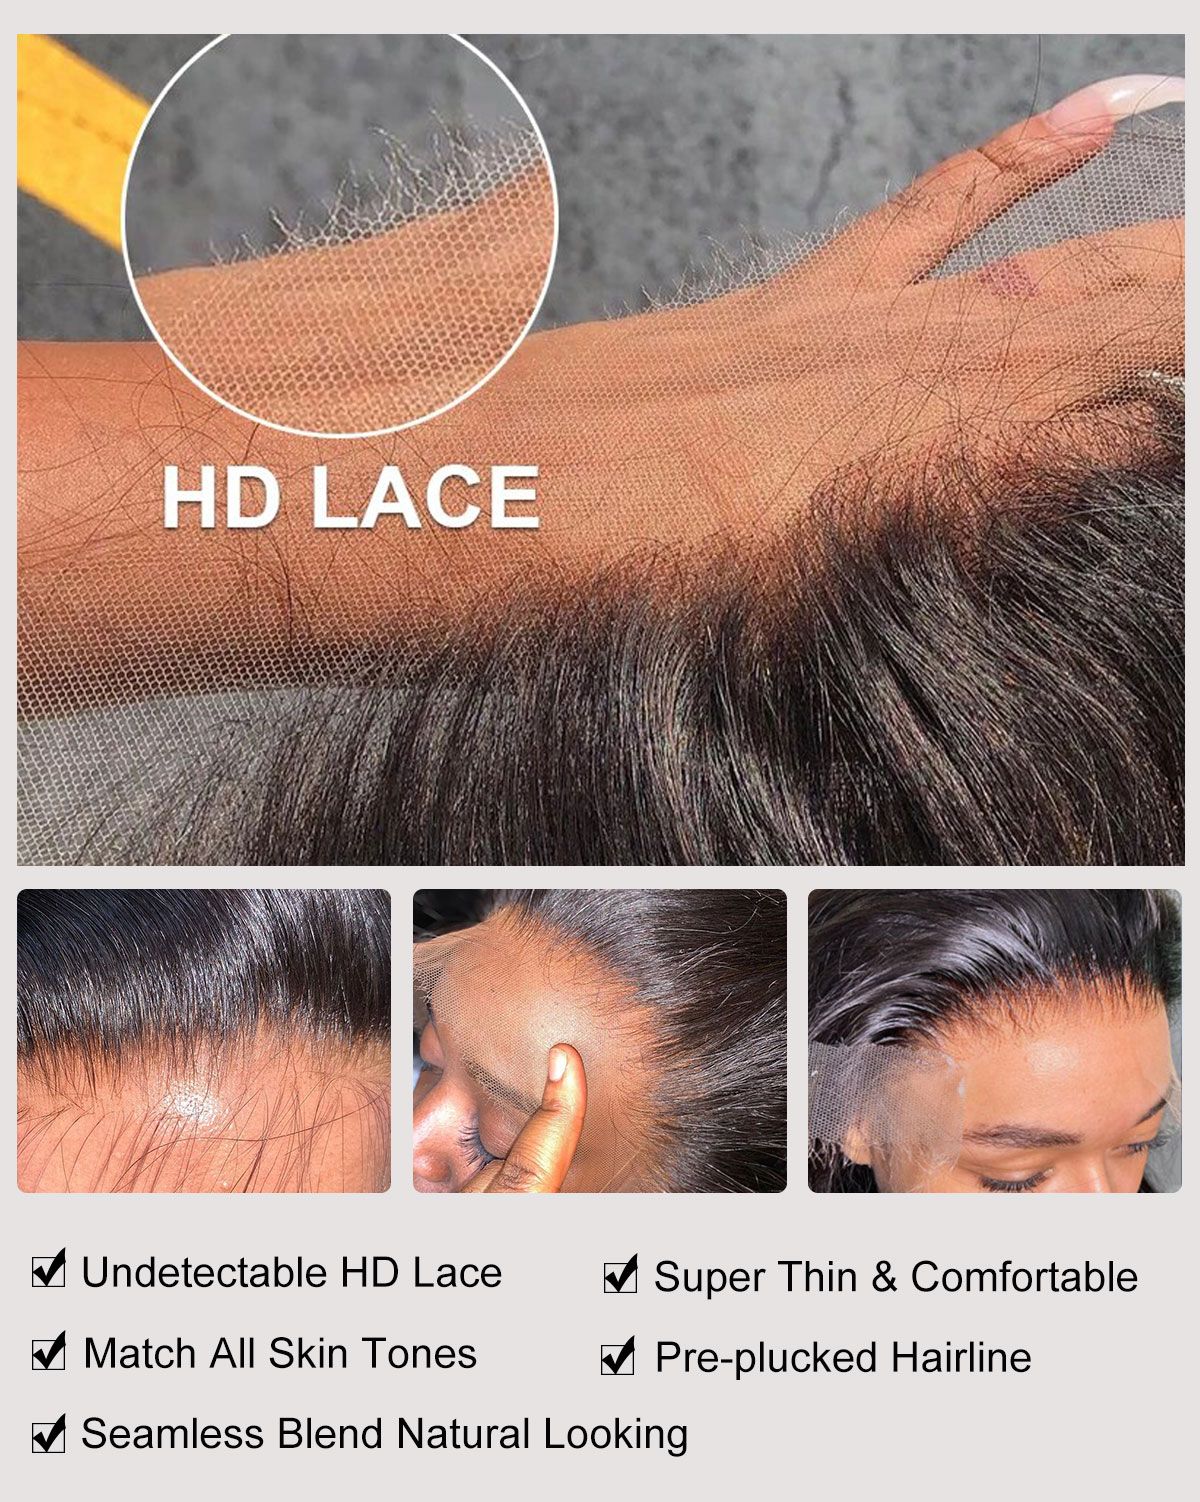 HD lace wig details